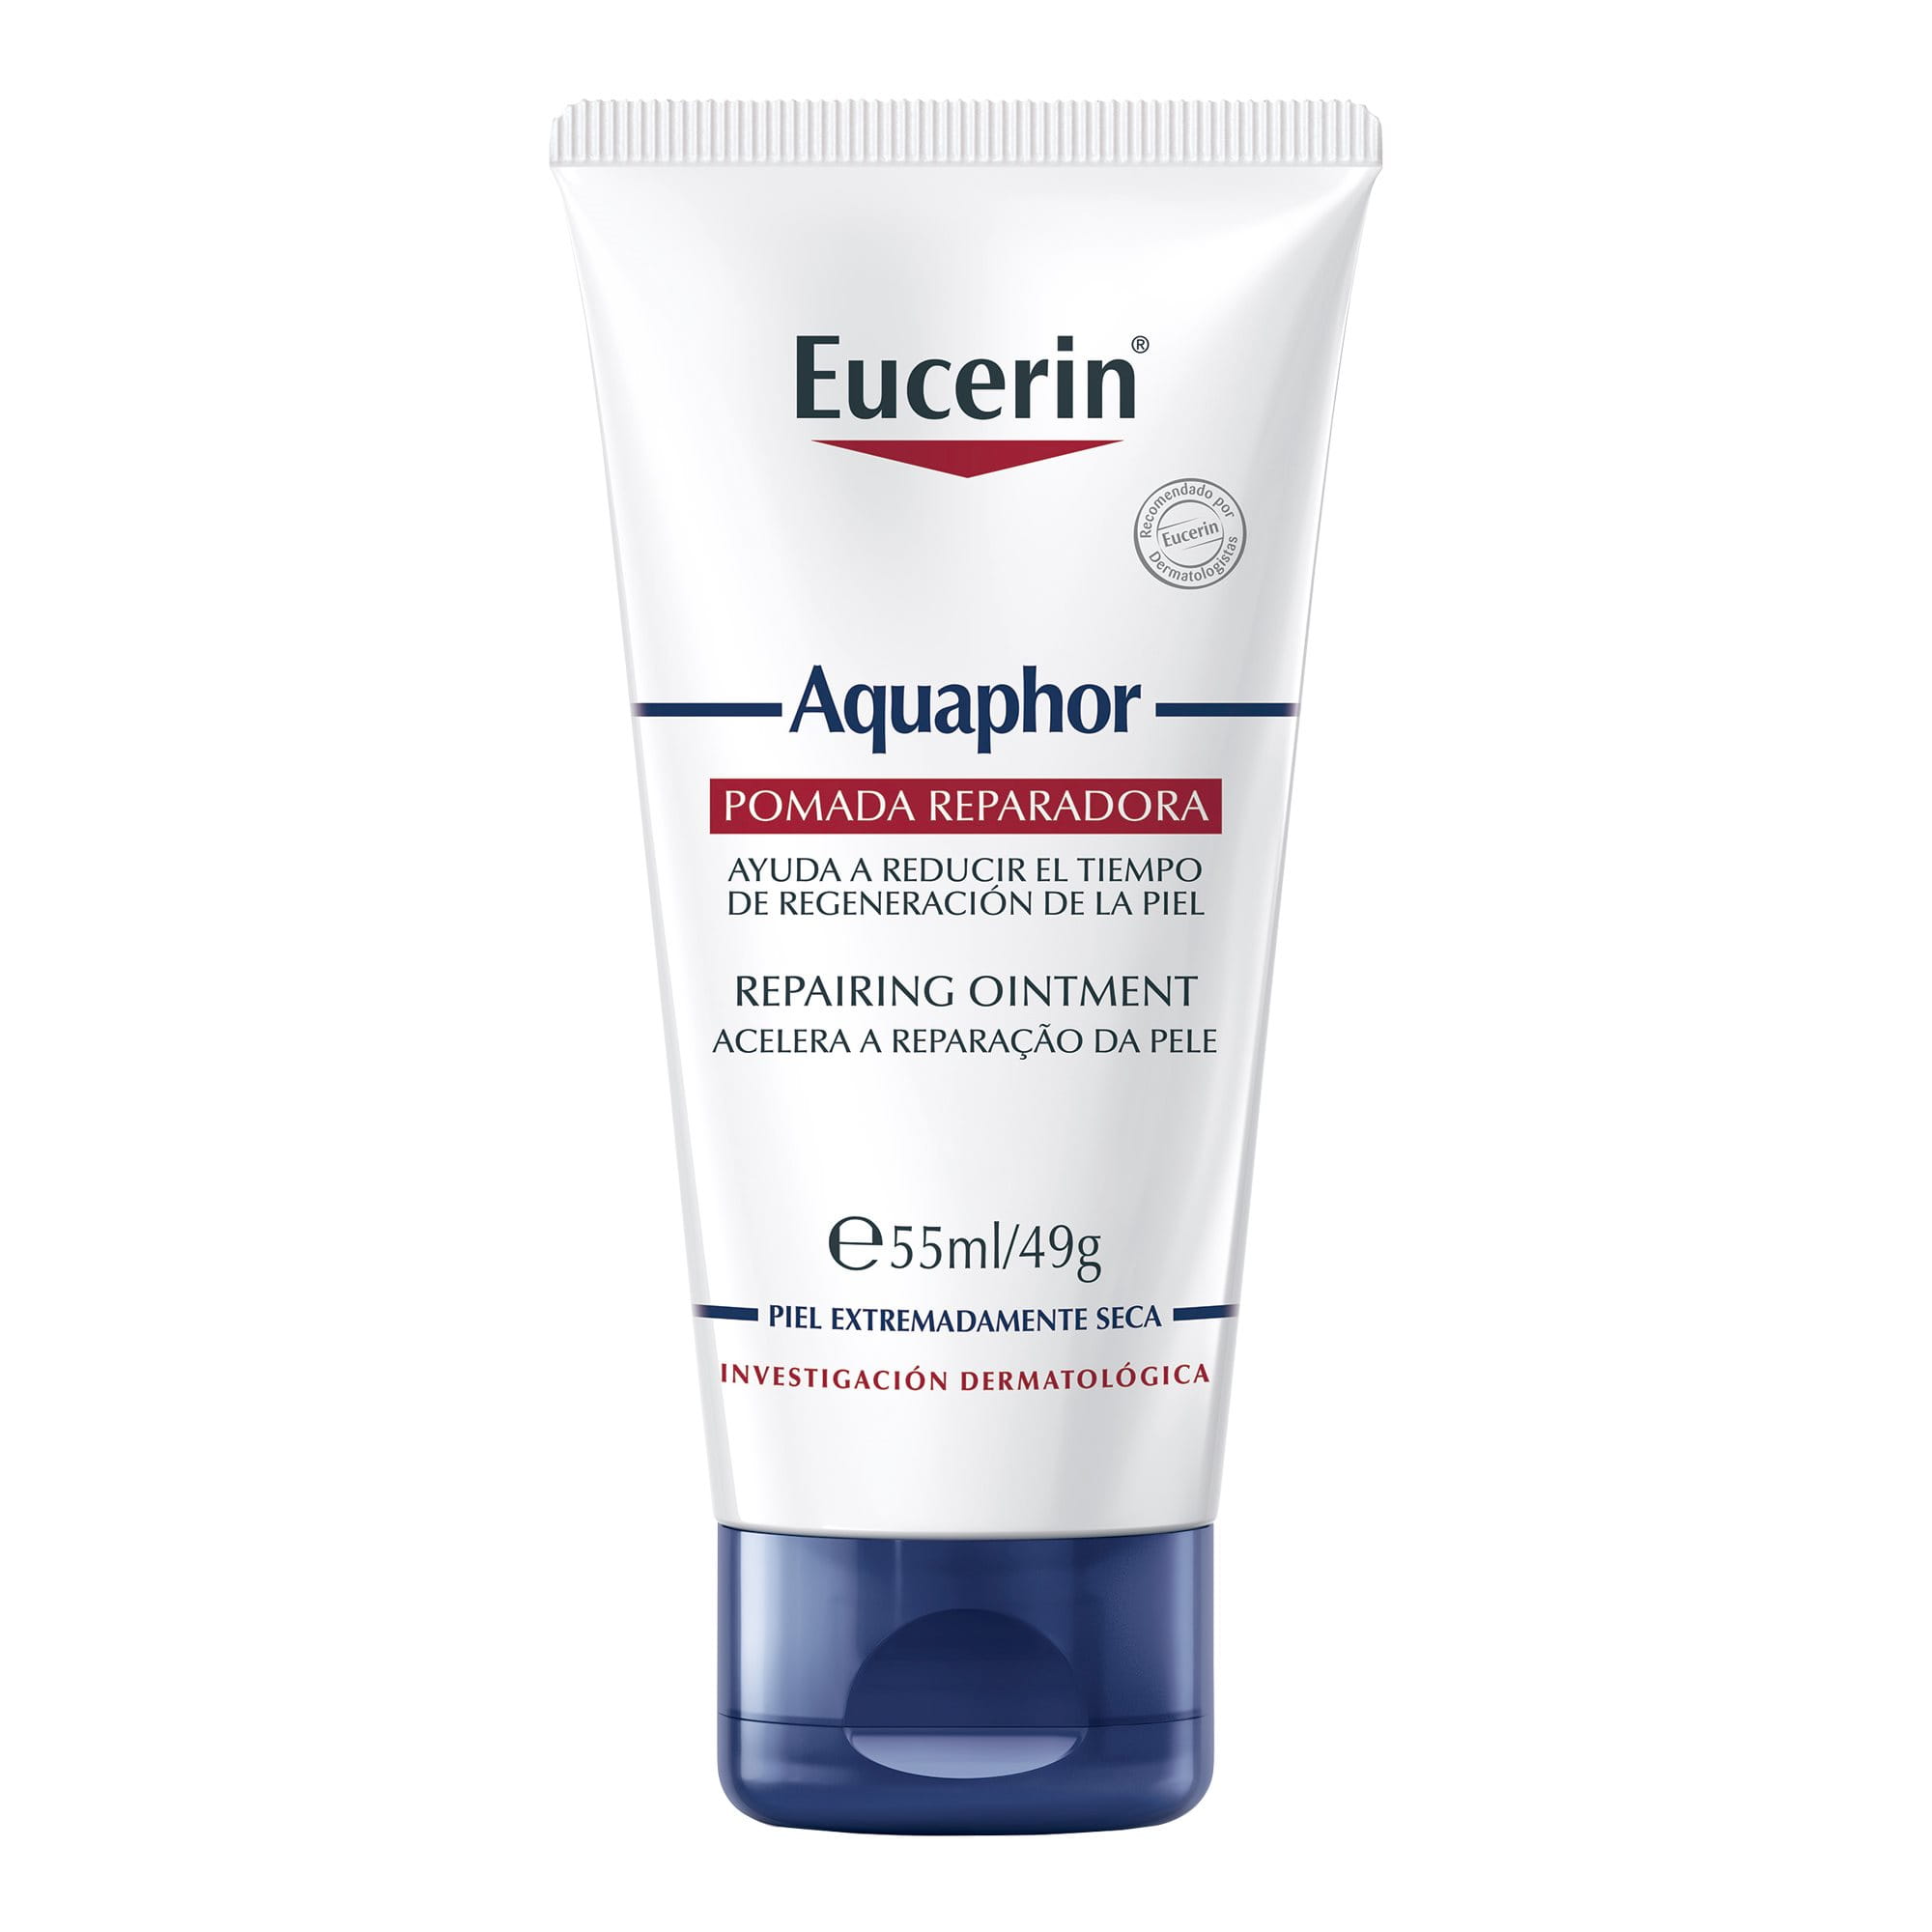 Aquaphor Crema Cicatrizante piel dañada o irritada | Eucerin